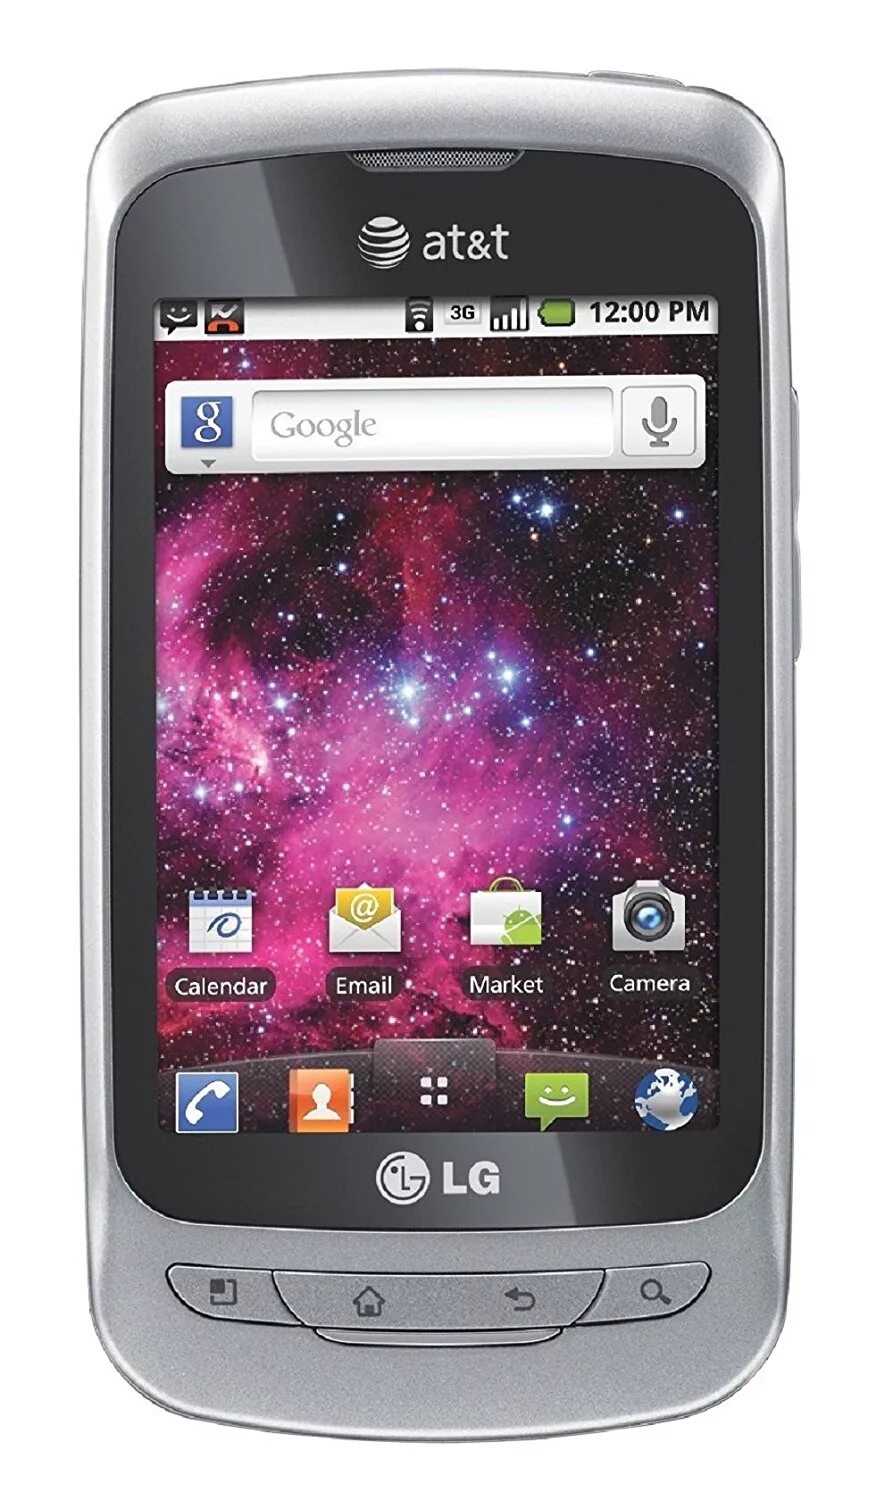 Gsm андроид. LG Android 2.3.4. Андроид 2.2. Андроид 2.3.5. Телефон LG 2011 года выпуска.